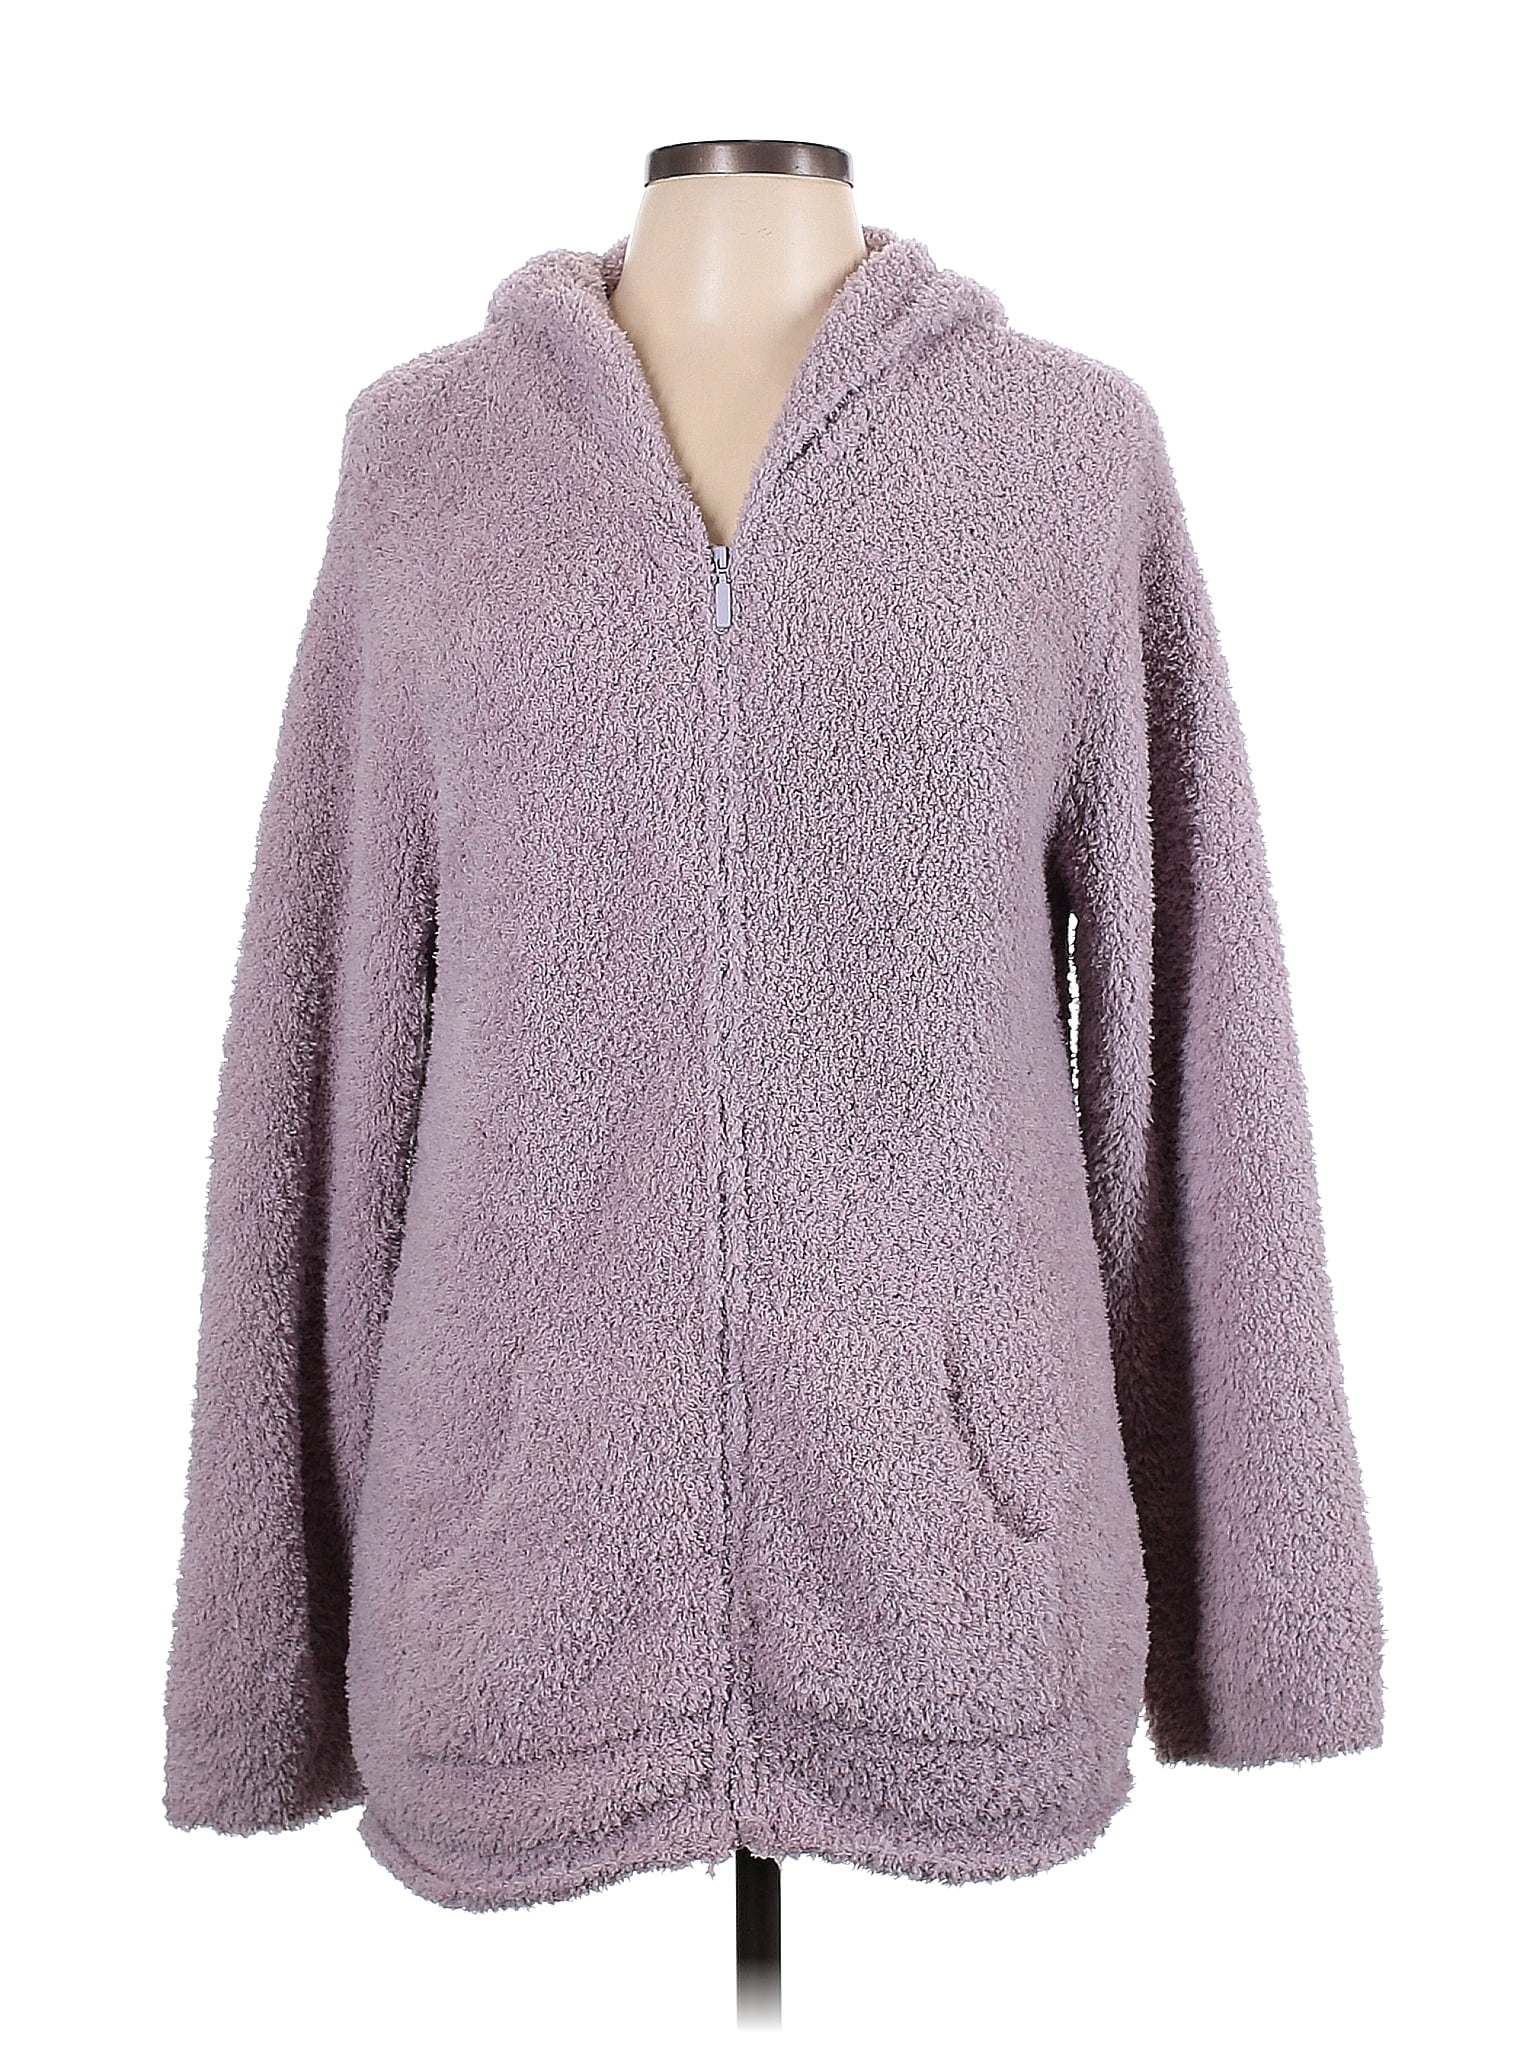 Barefoot Dreams 100% Knit Solid Purple Fleece Size L - 52% off | thredUP